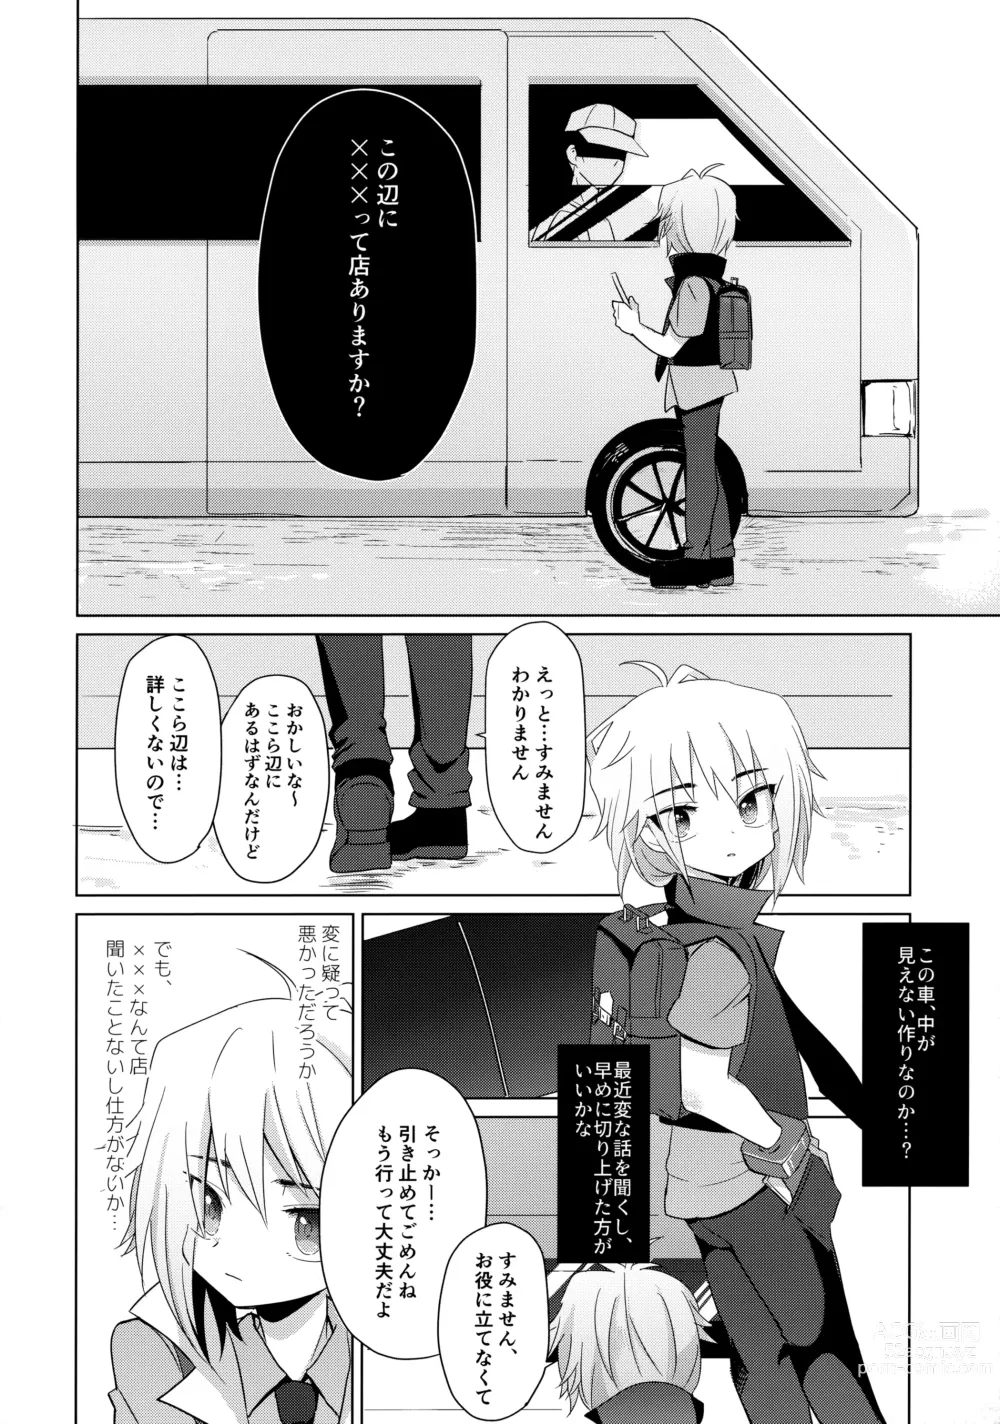 Page 7 of doujinshi Hakoniwa Therapy